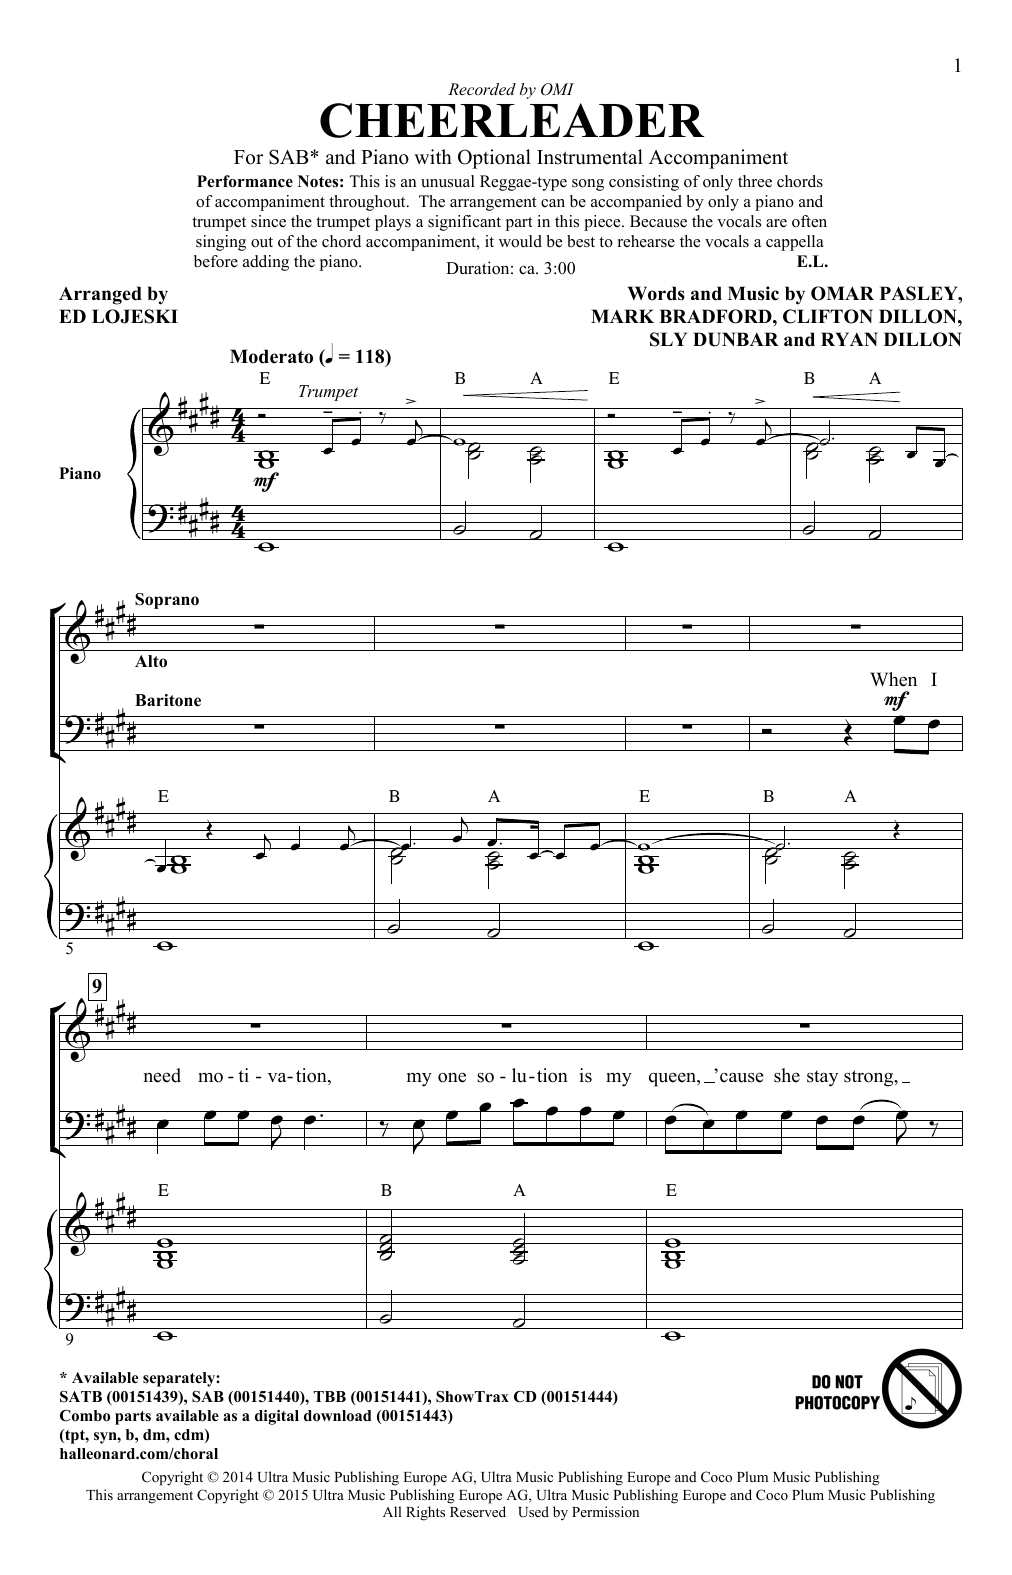 OMI Cheerleader (arr. Ed Lojeski) Sheet Music Notes & Chords for SAB - Download or Print PDF